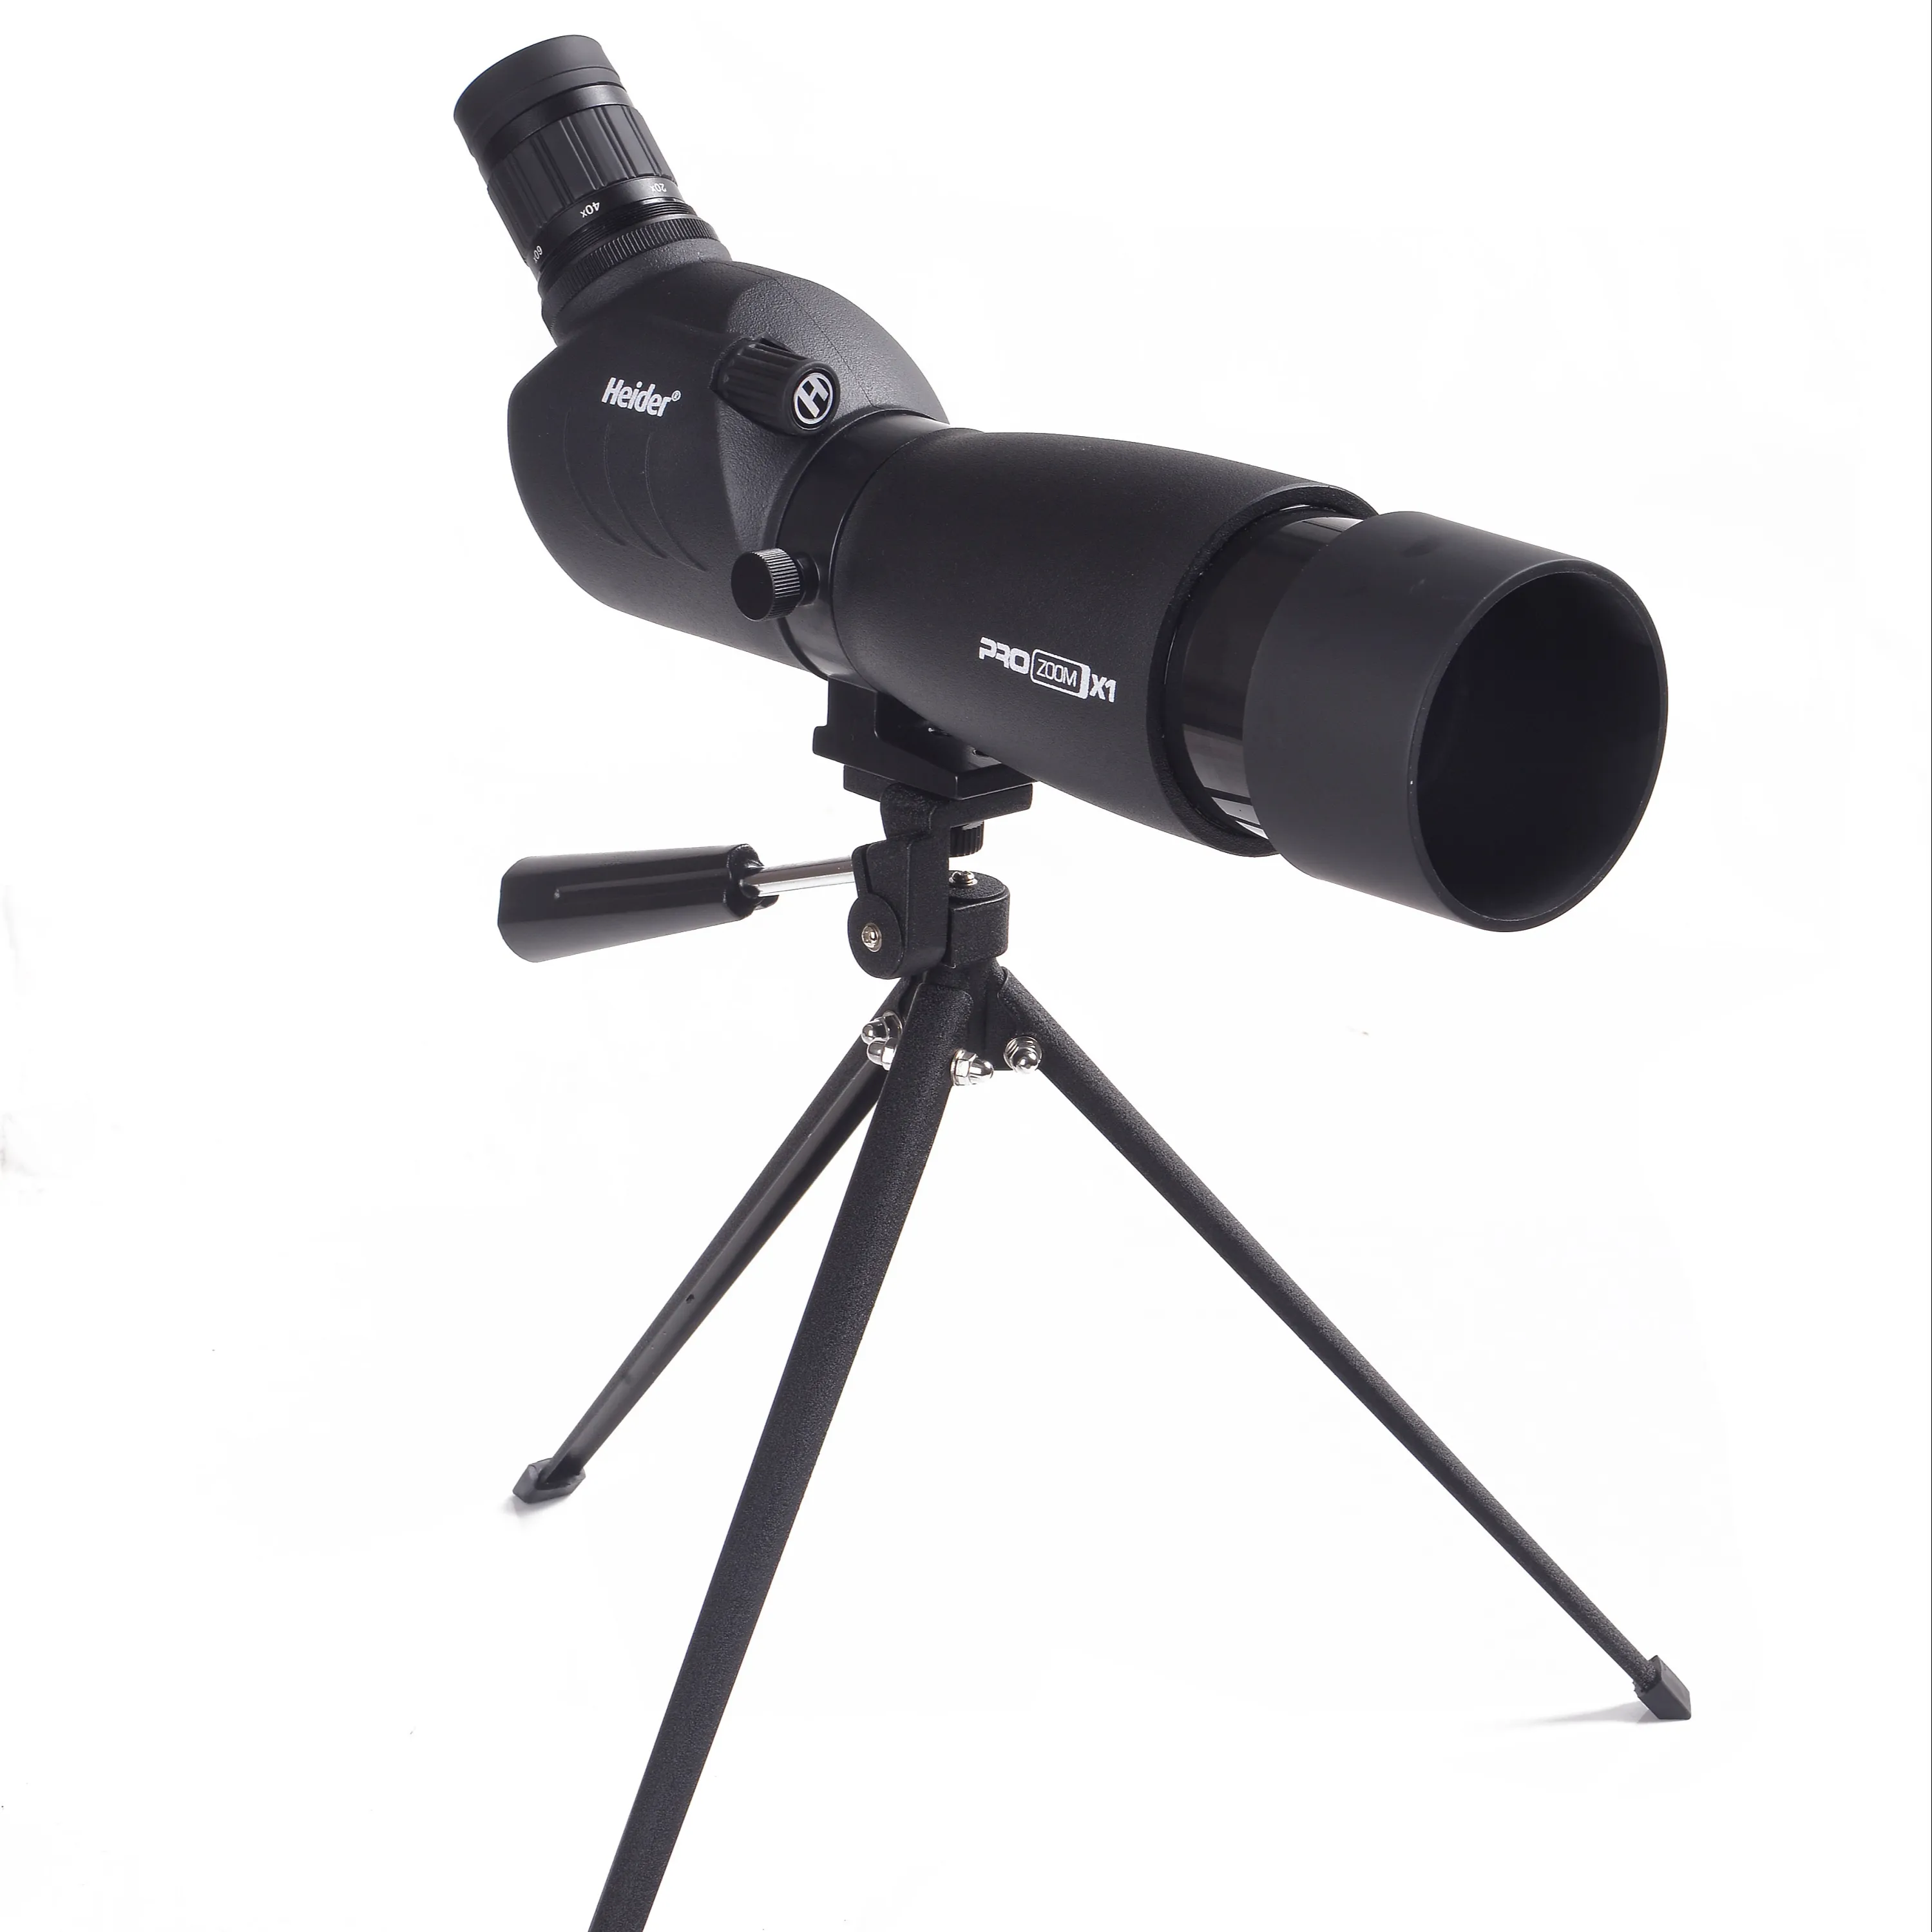 Waterproof Monocular 20-60x60 Optical Astronomical Hunting Porro Scope Hunting Watching Birds Telescope Spotting Binoculars